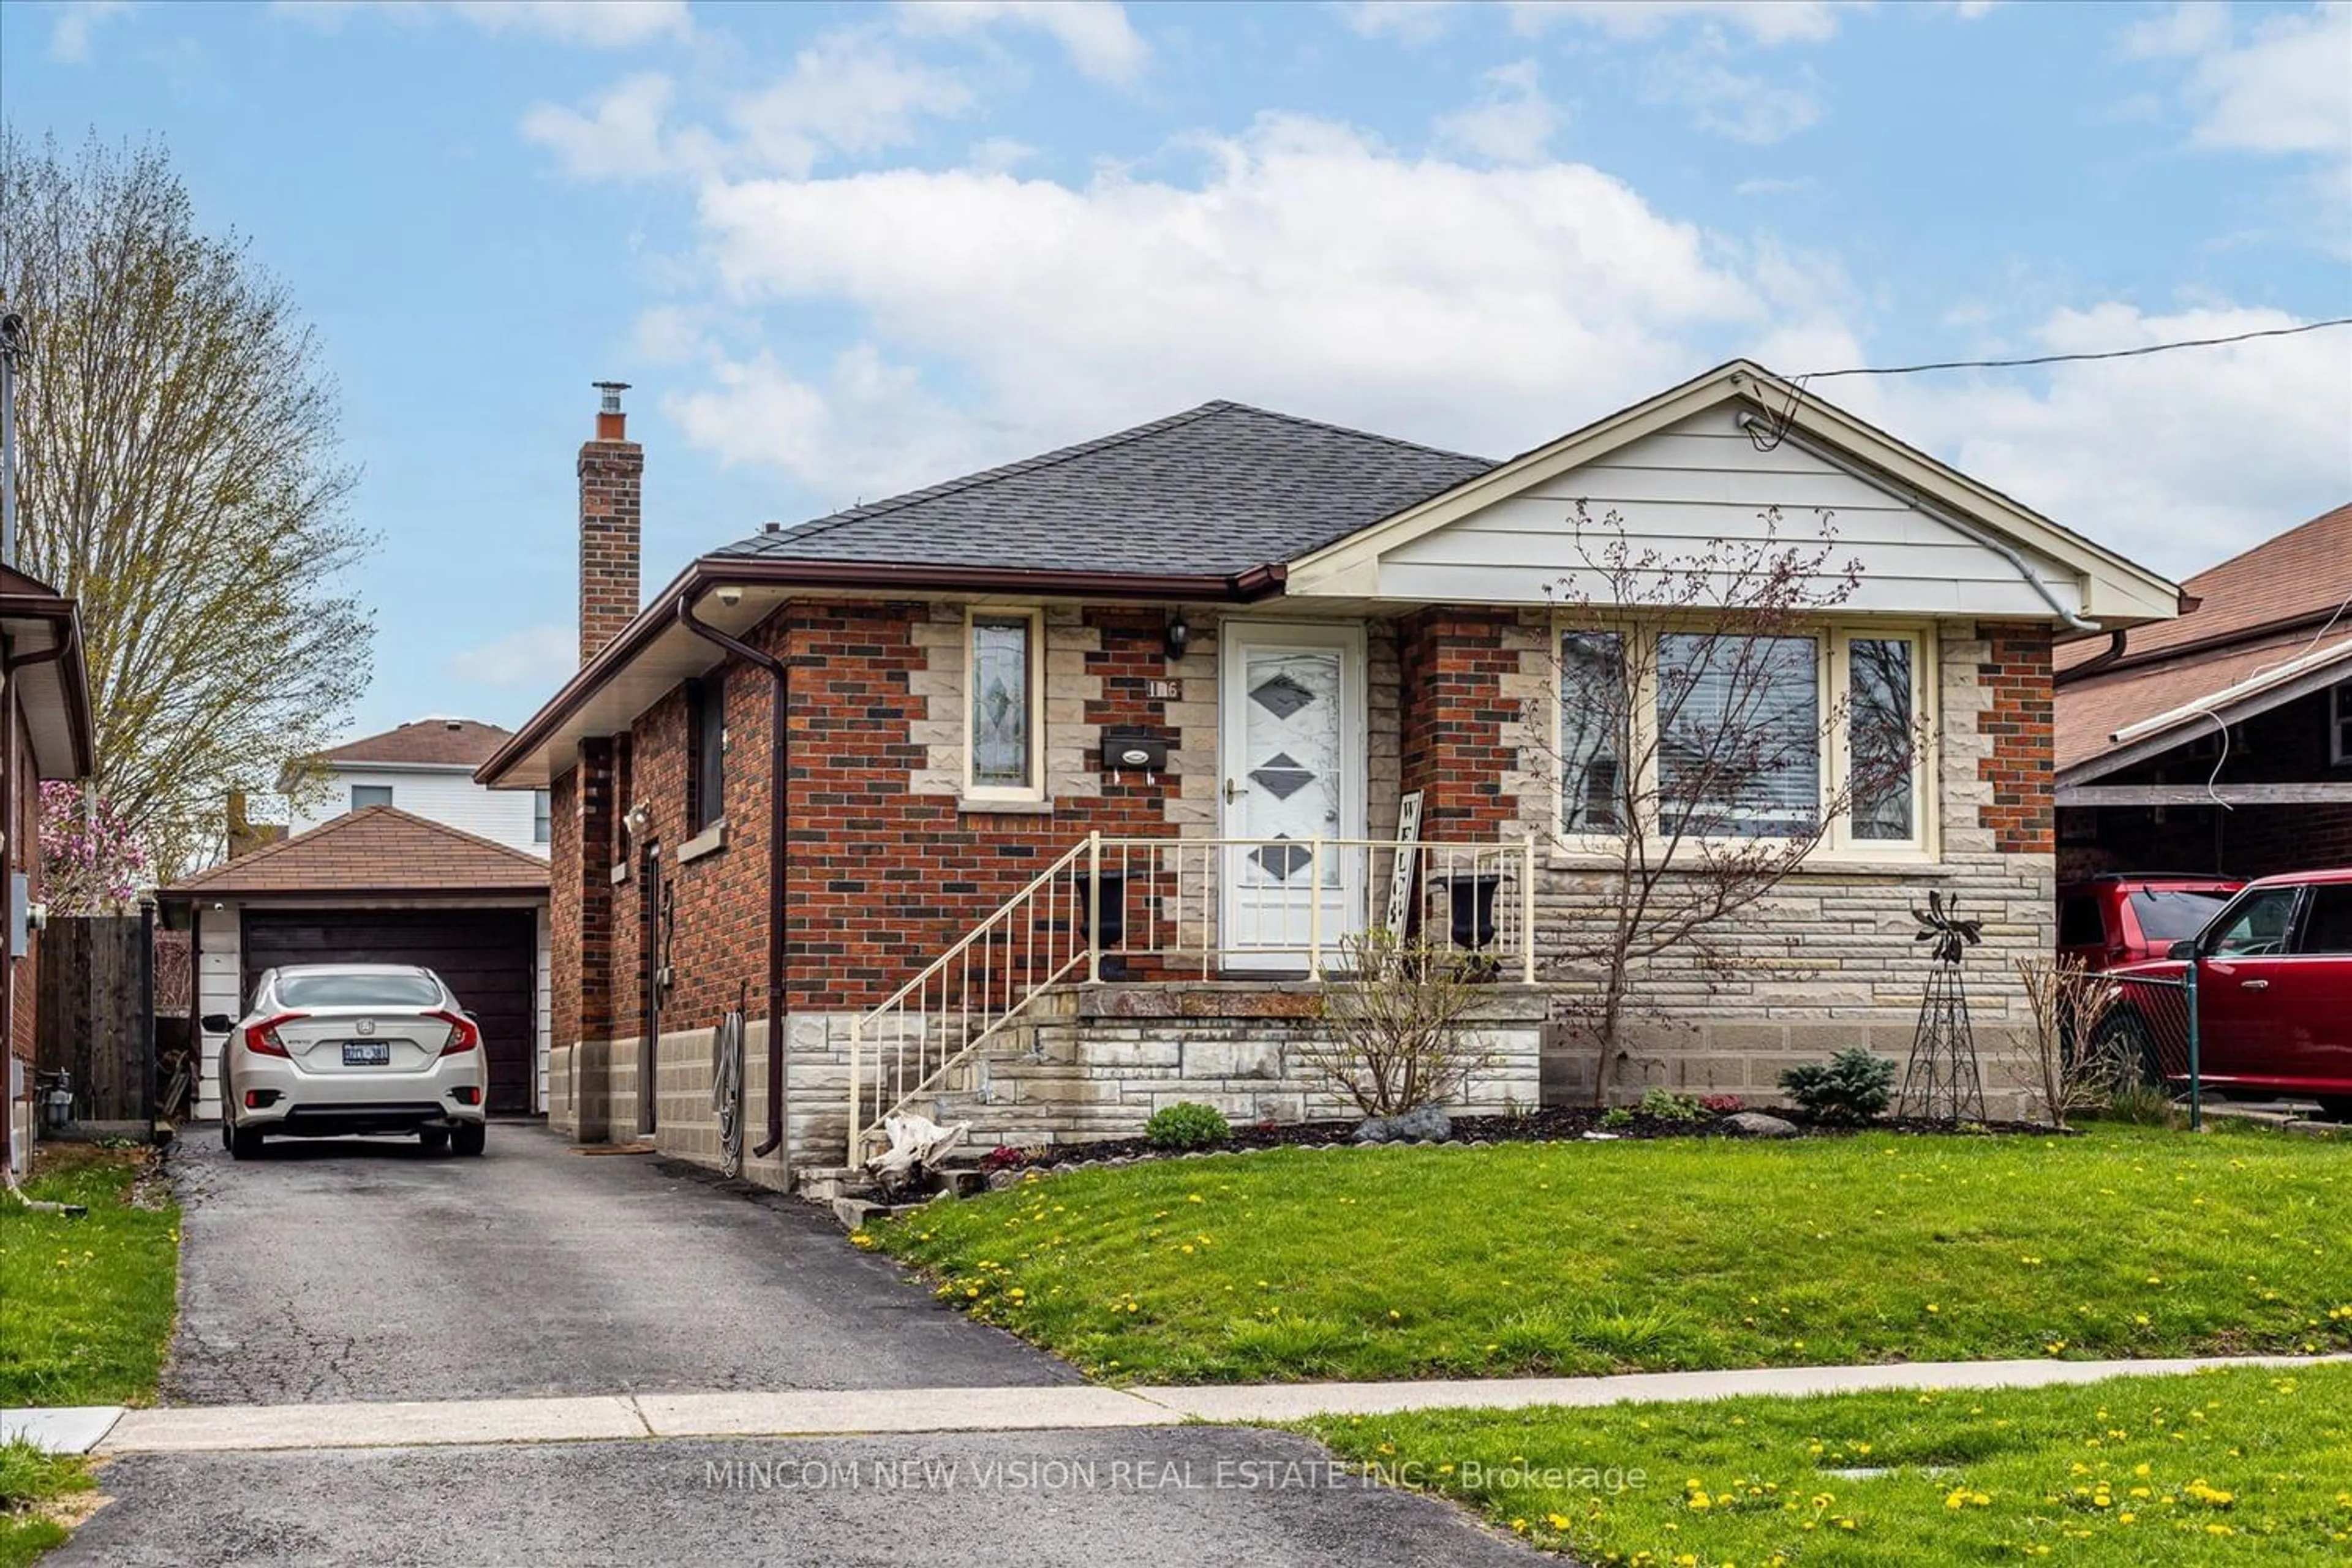 Home with brick exterior material for 126 Chadburn St, Oshawa Ontario L1H 5V4